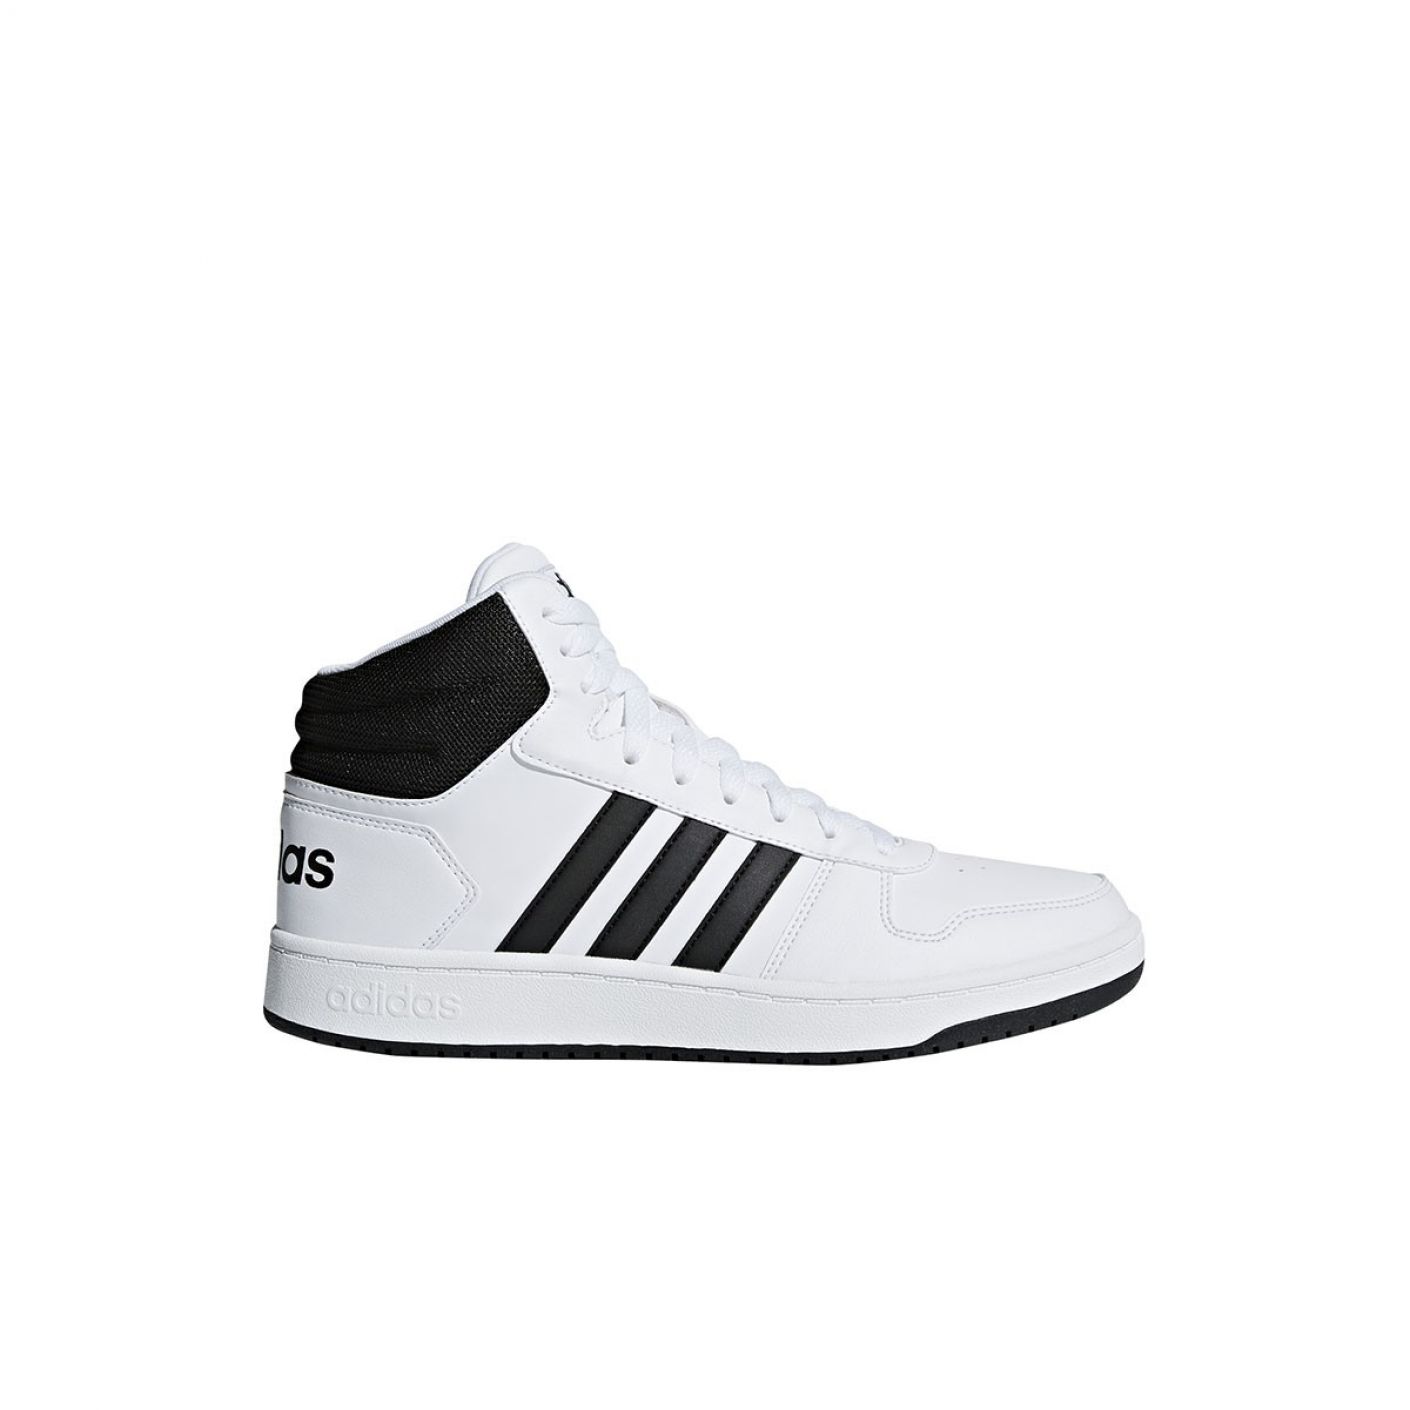 Adidas Hoops 2.0 mid White Core Black